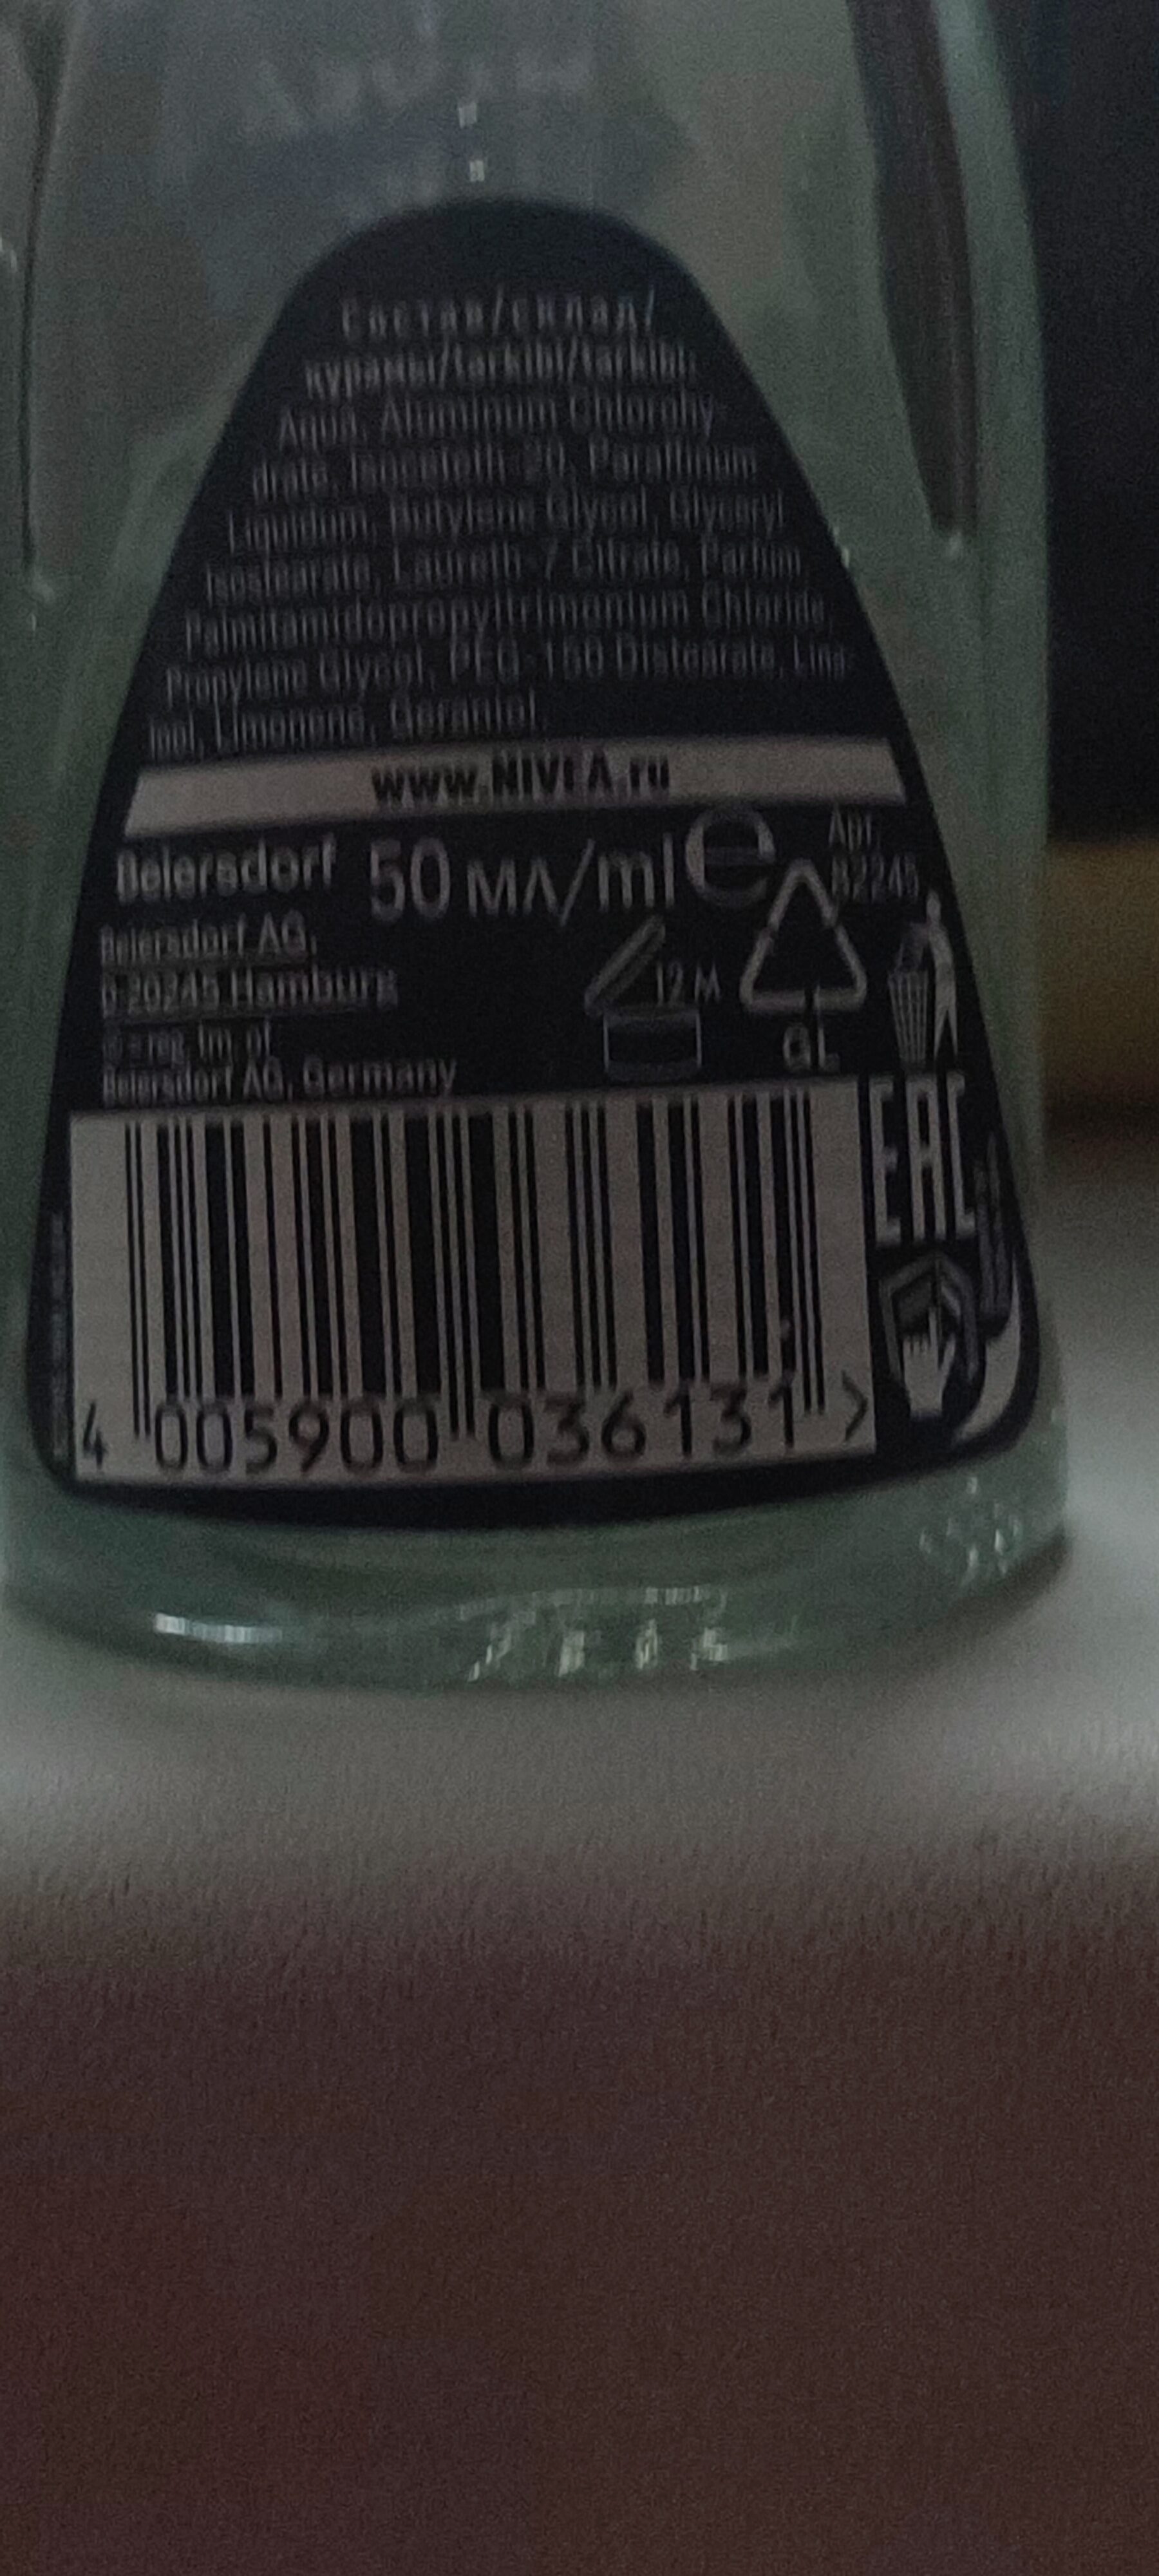 Nivea MAN - Ingredients - ru